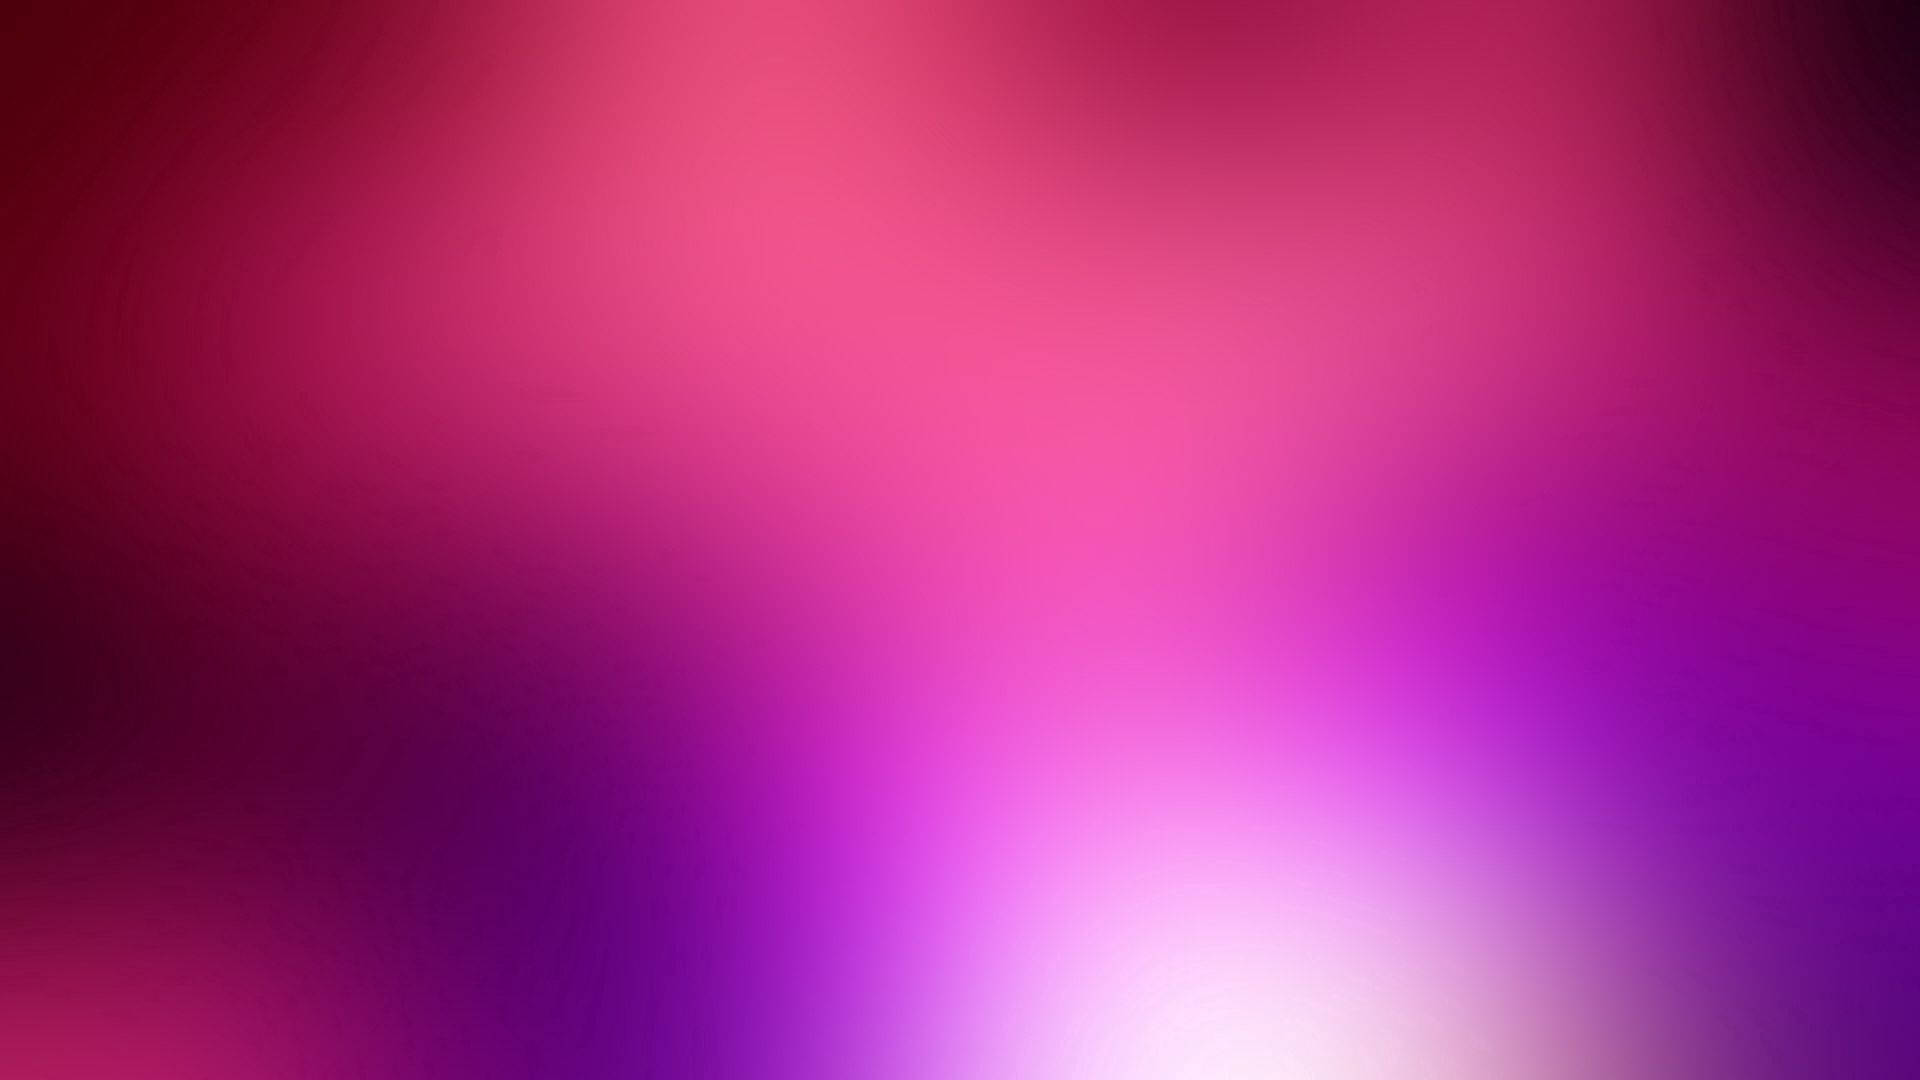 Bright Blurred Pink Wallpaper